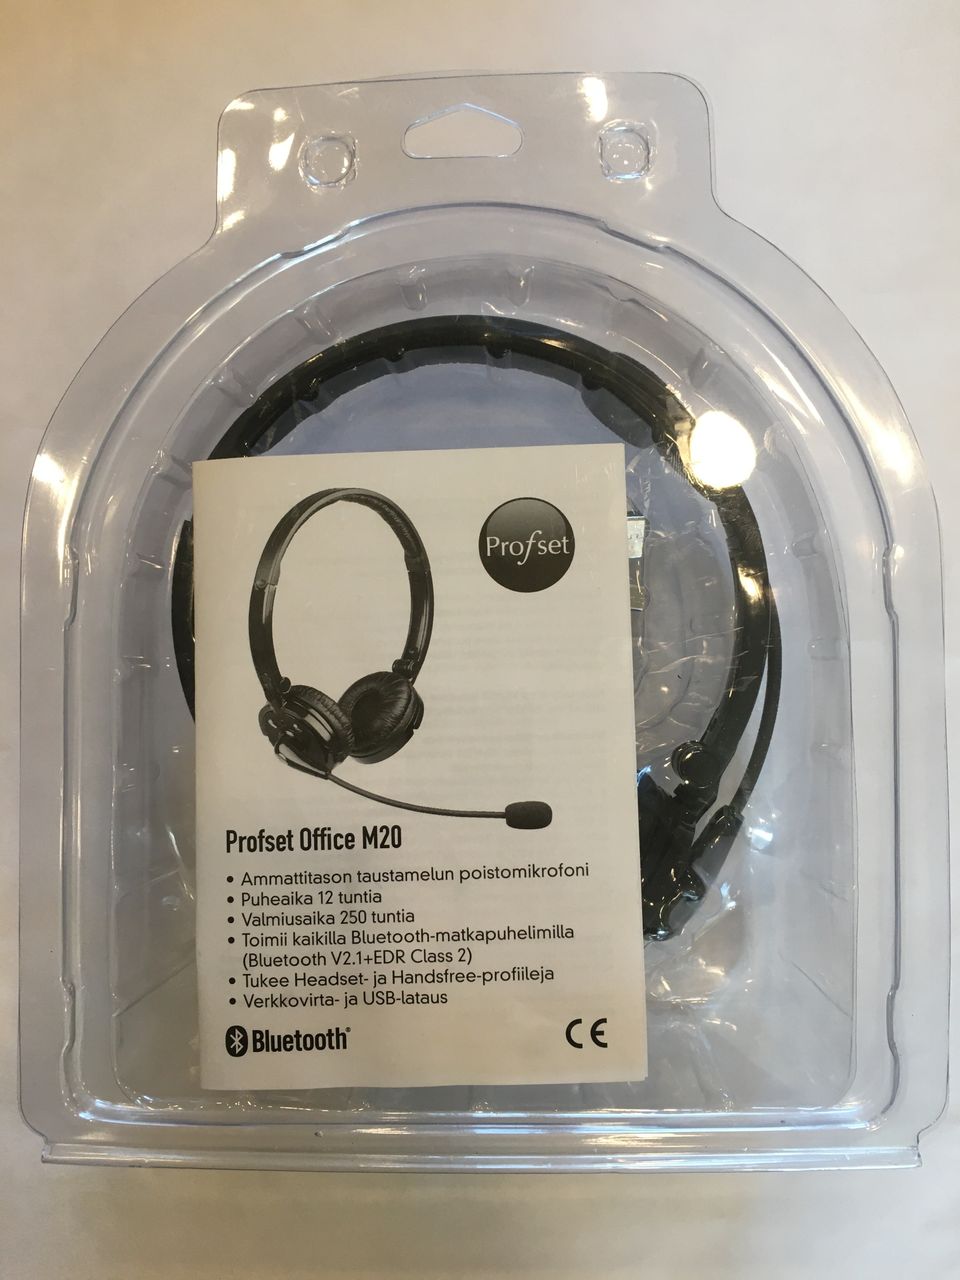 Profset Office M20 Bluetooth Handsfree Headset